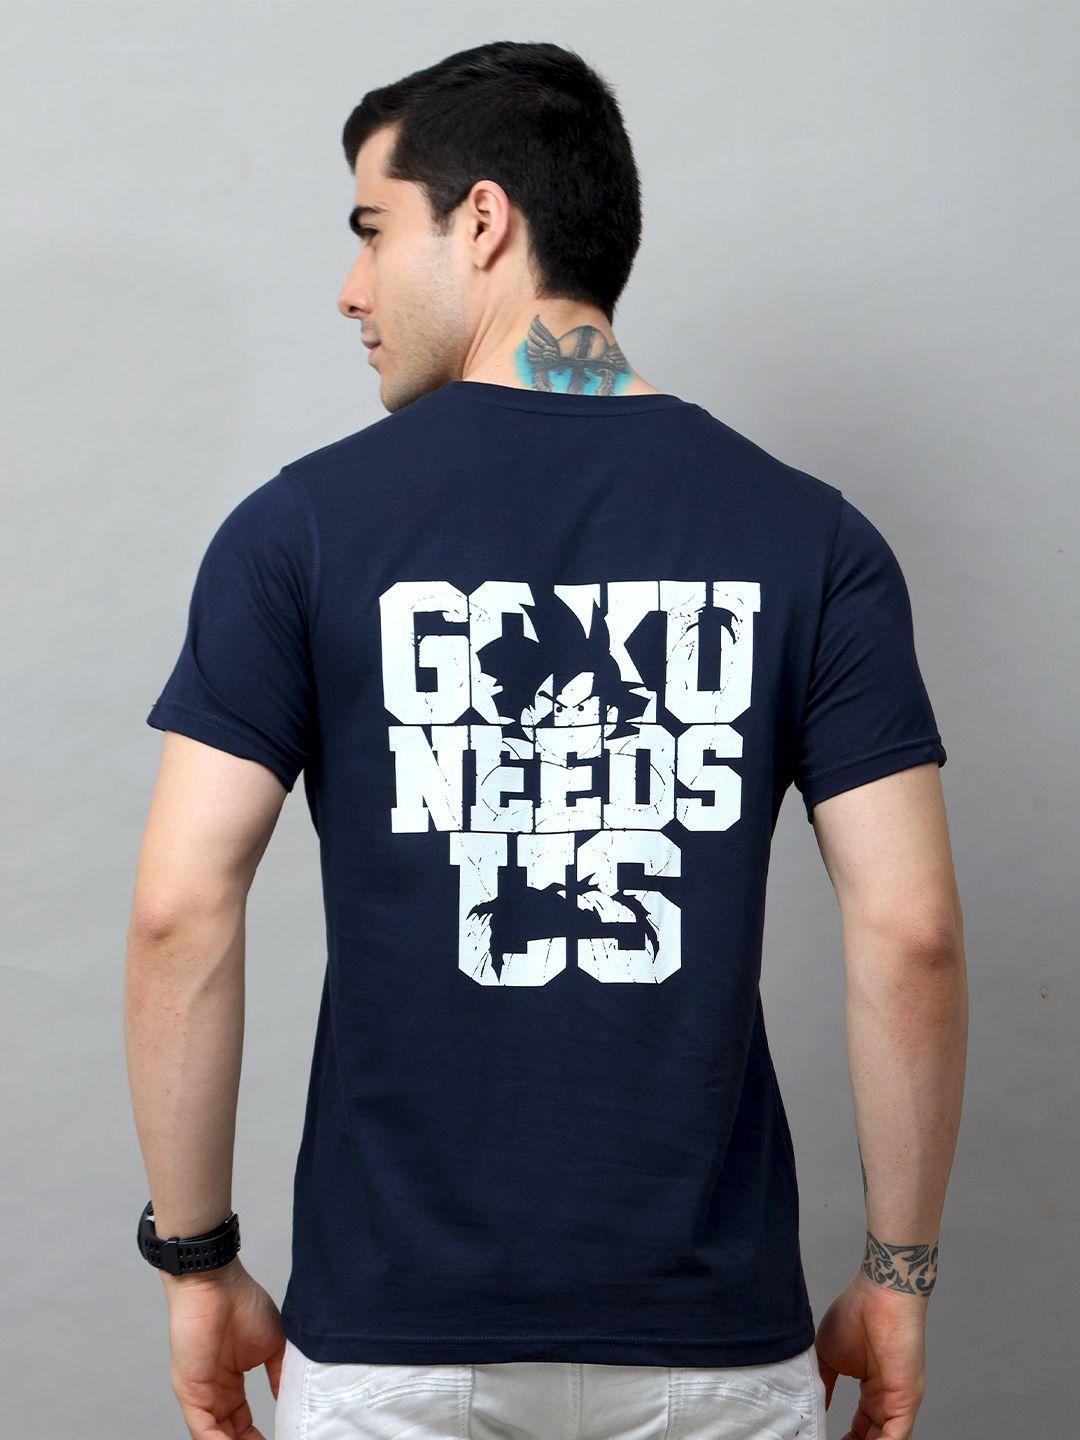 bushirt men navy blue typography cotton t-shirt